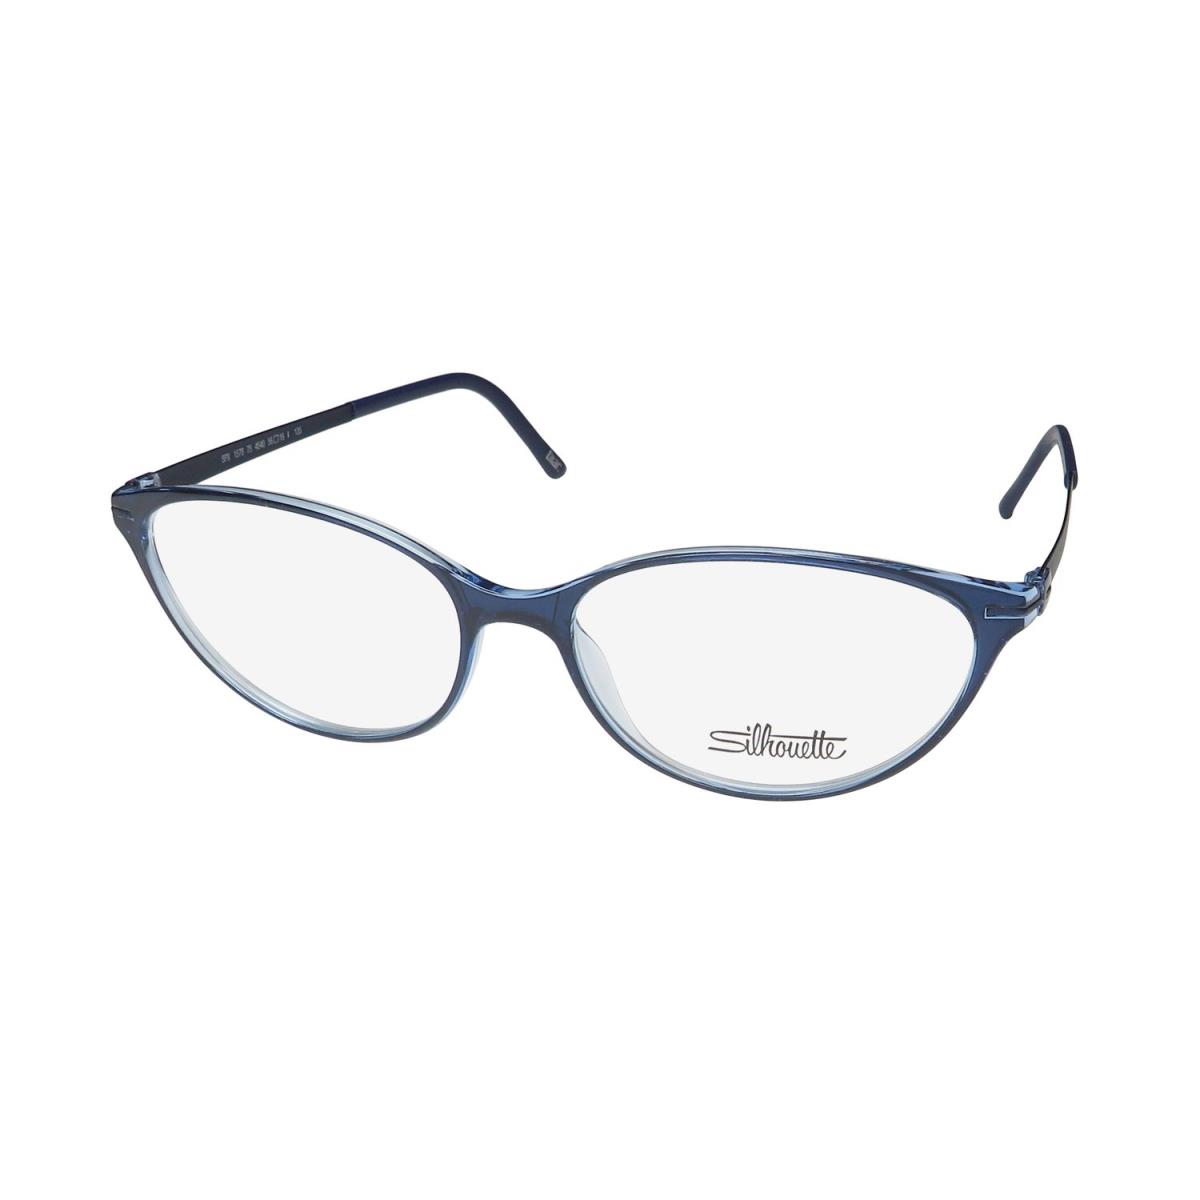 Silhouette 1578 School Teacher/librarian Look 60S/70S Eyeglass Frame/glasses Navy / Blue